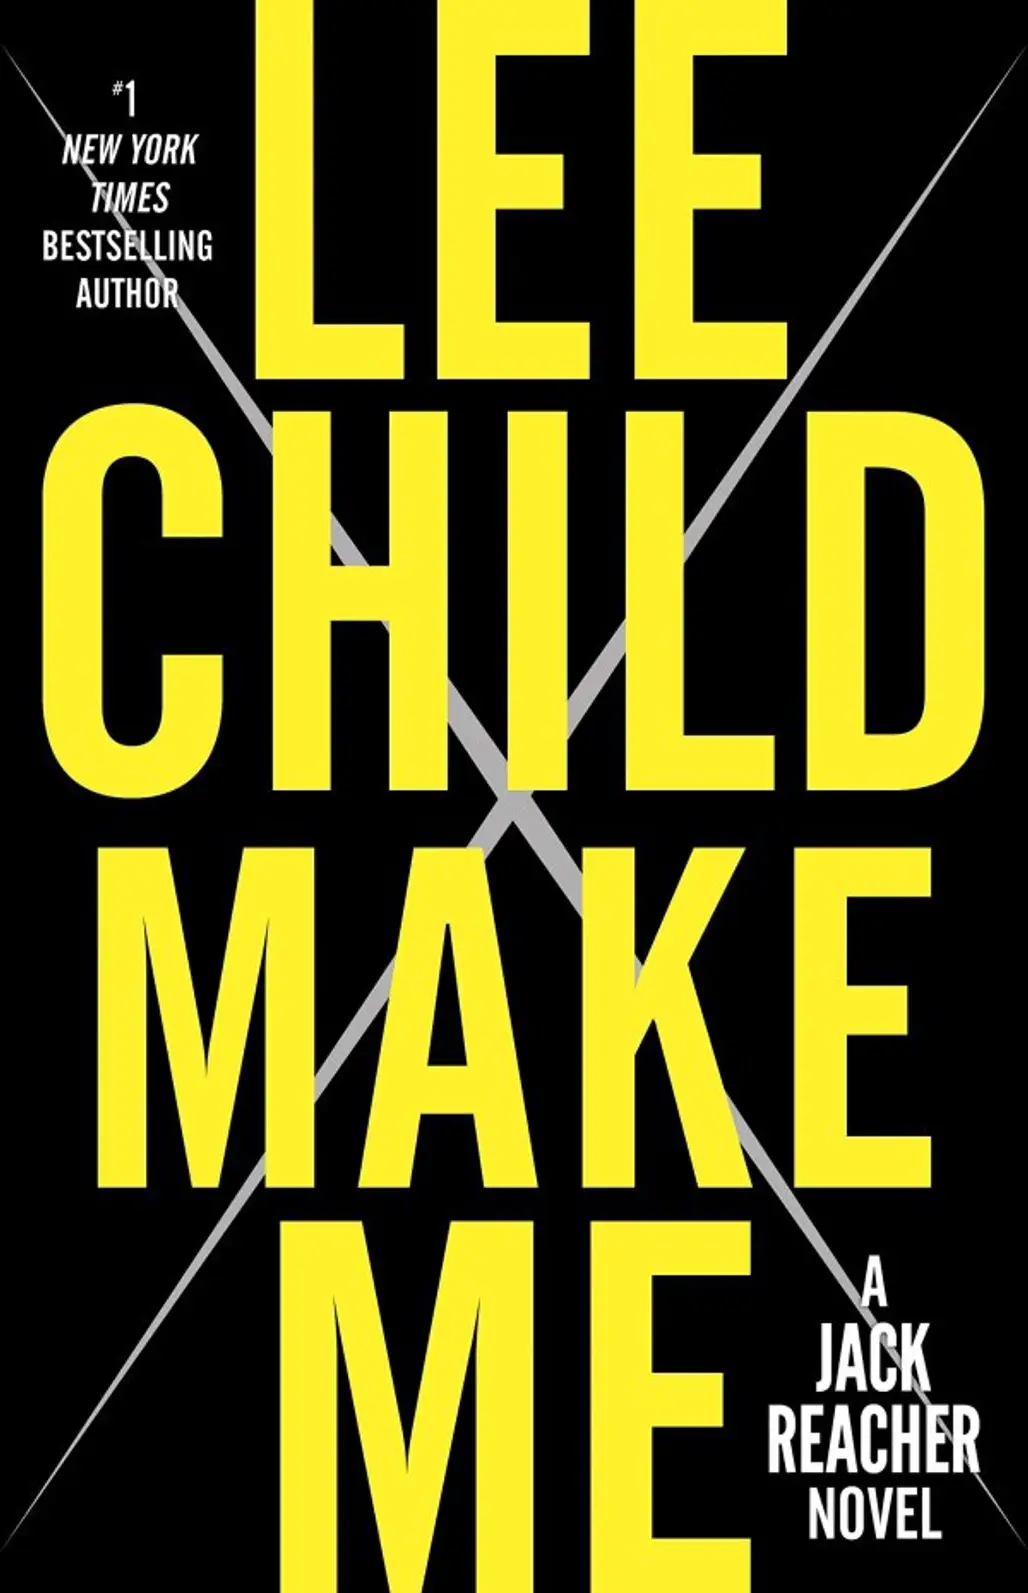 Make Me: a Jack Reacher Novel by Lee Child